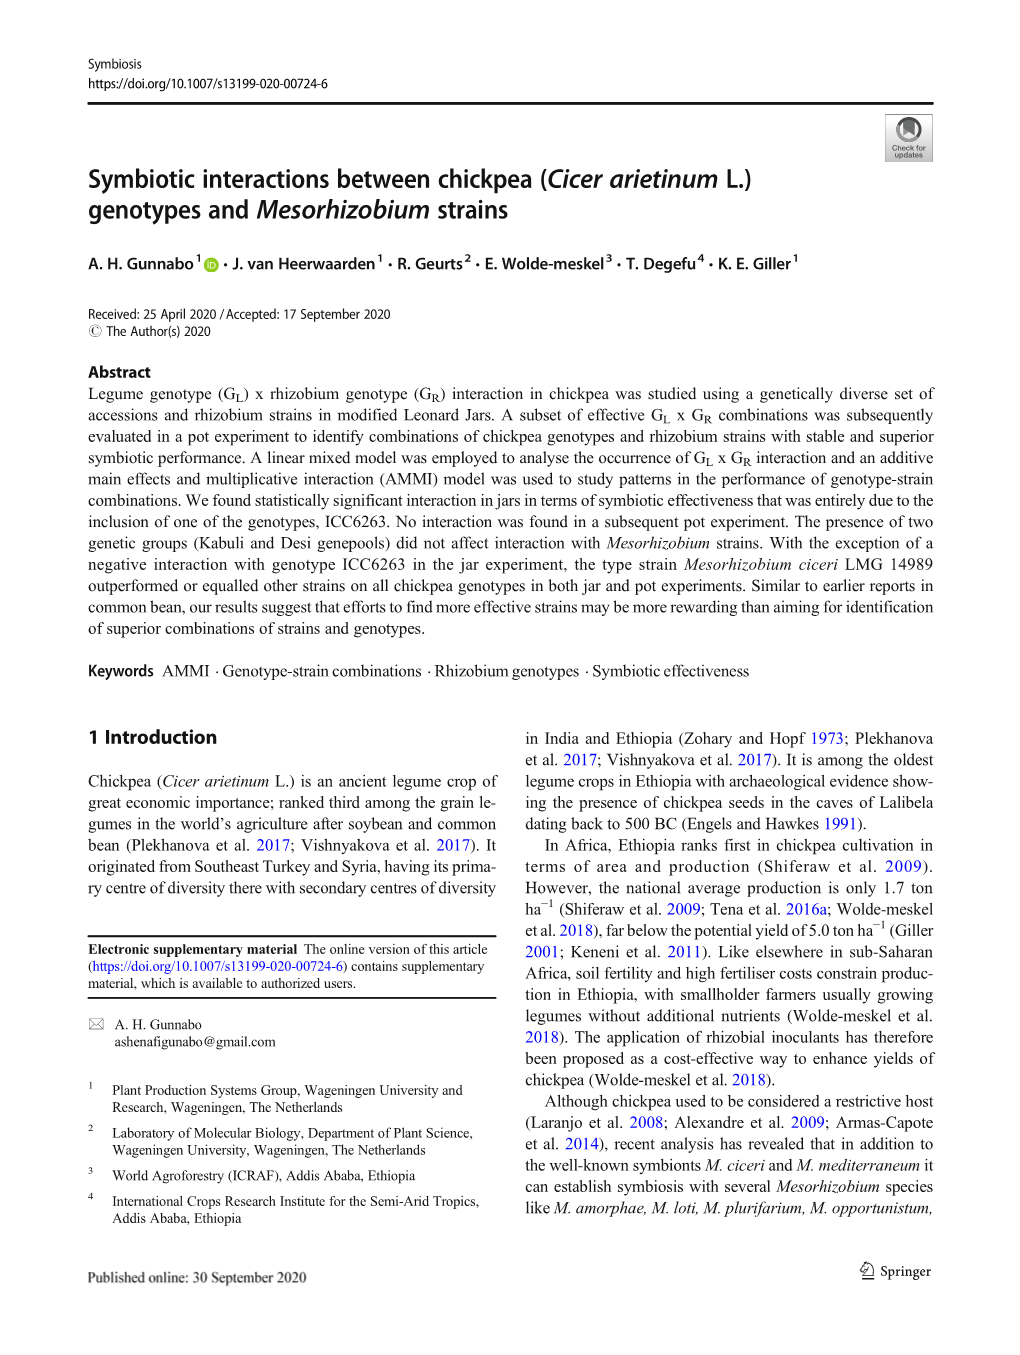 Symbiotic Interactions Between Chickpea (Cicer Arietinum L.) Genotypes and Mesorhizobium Strains